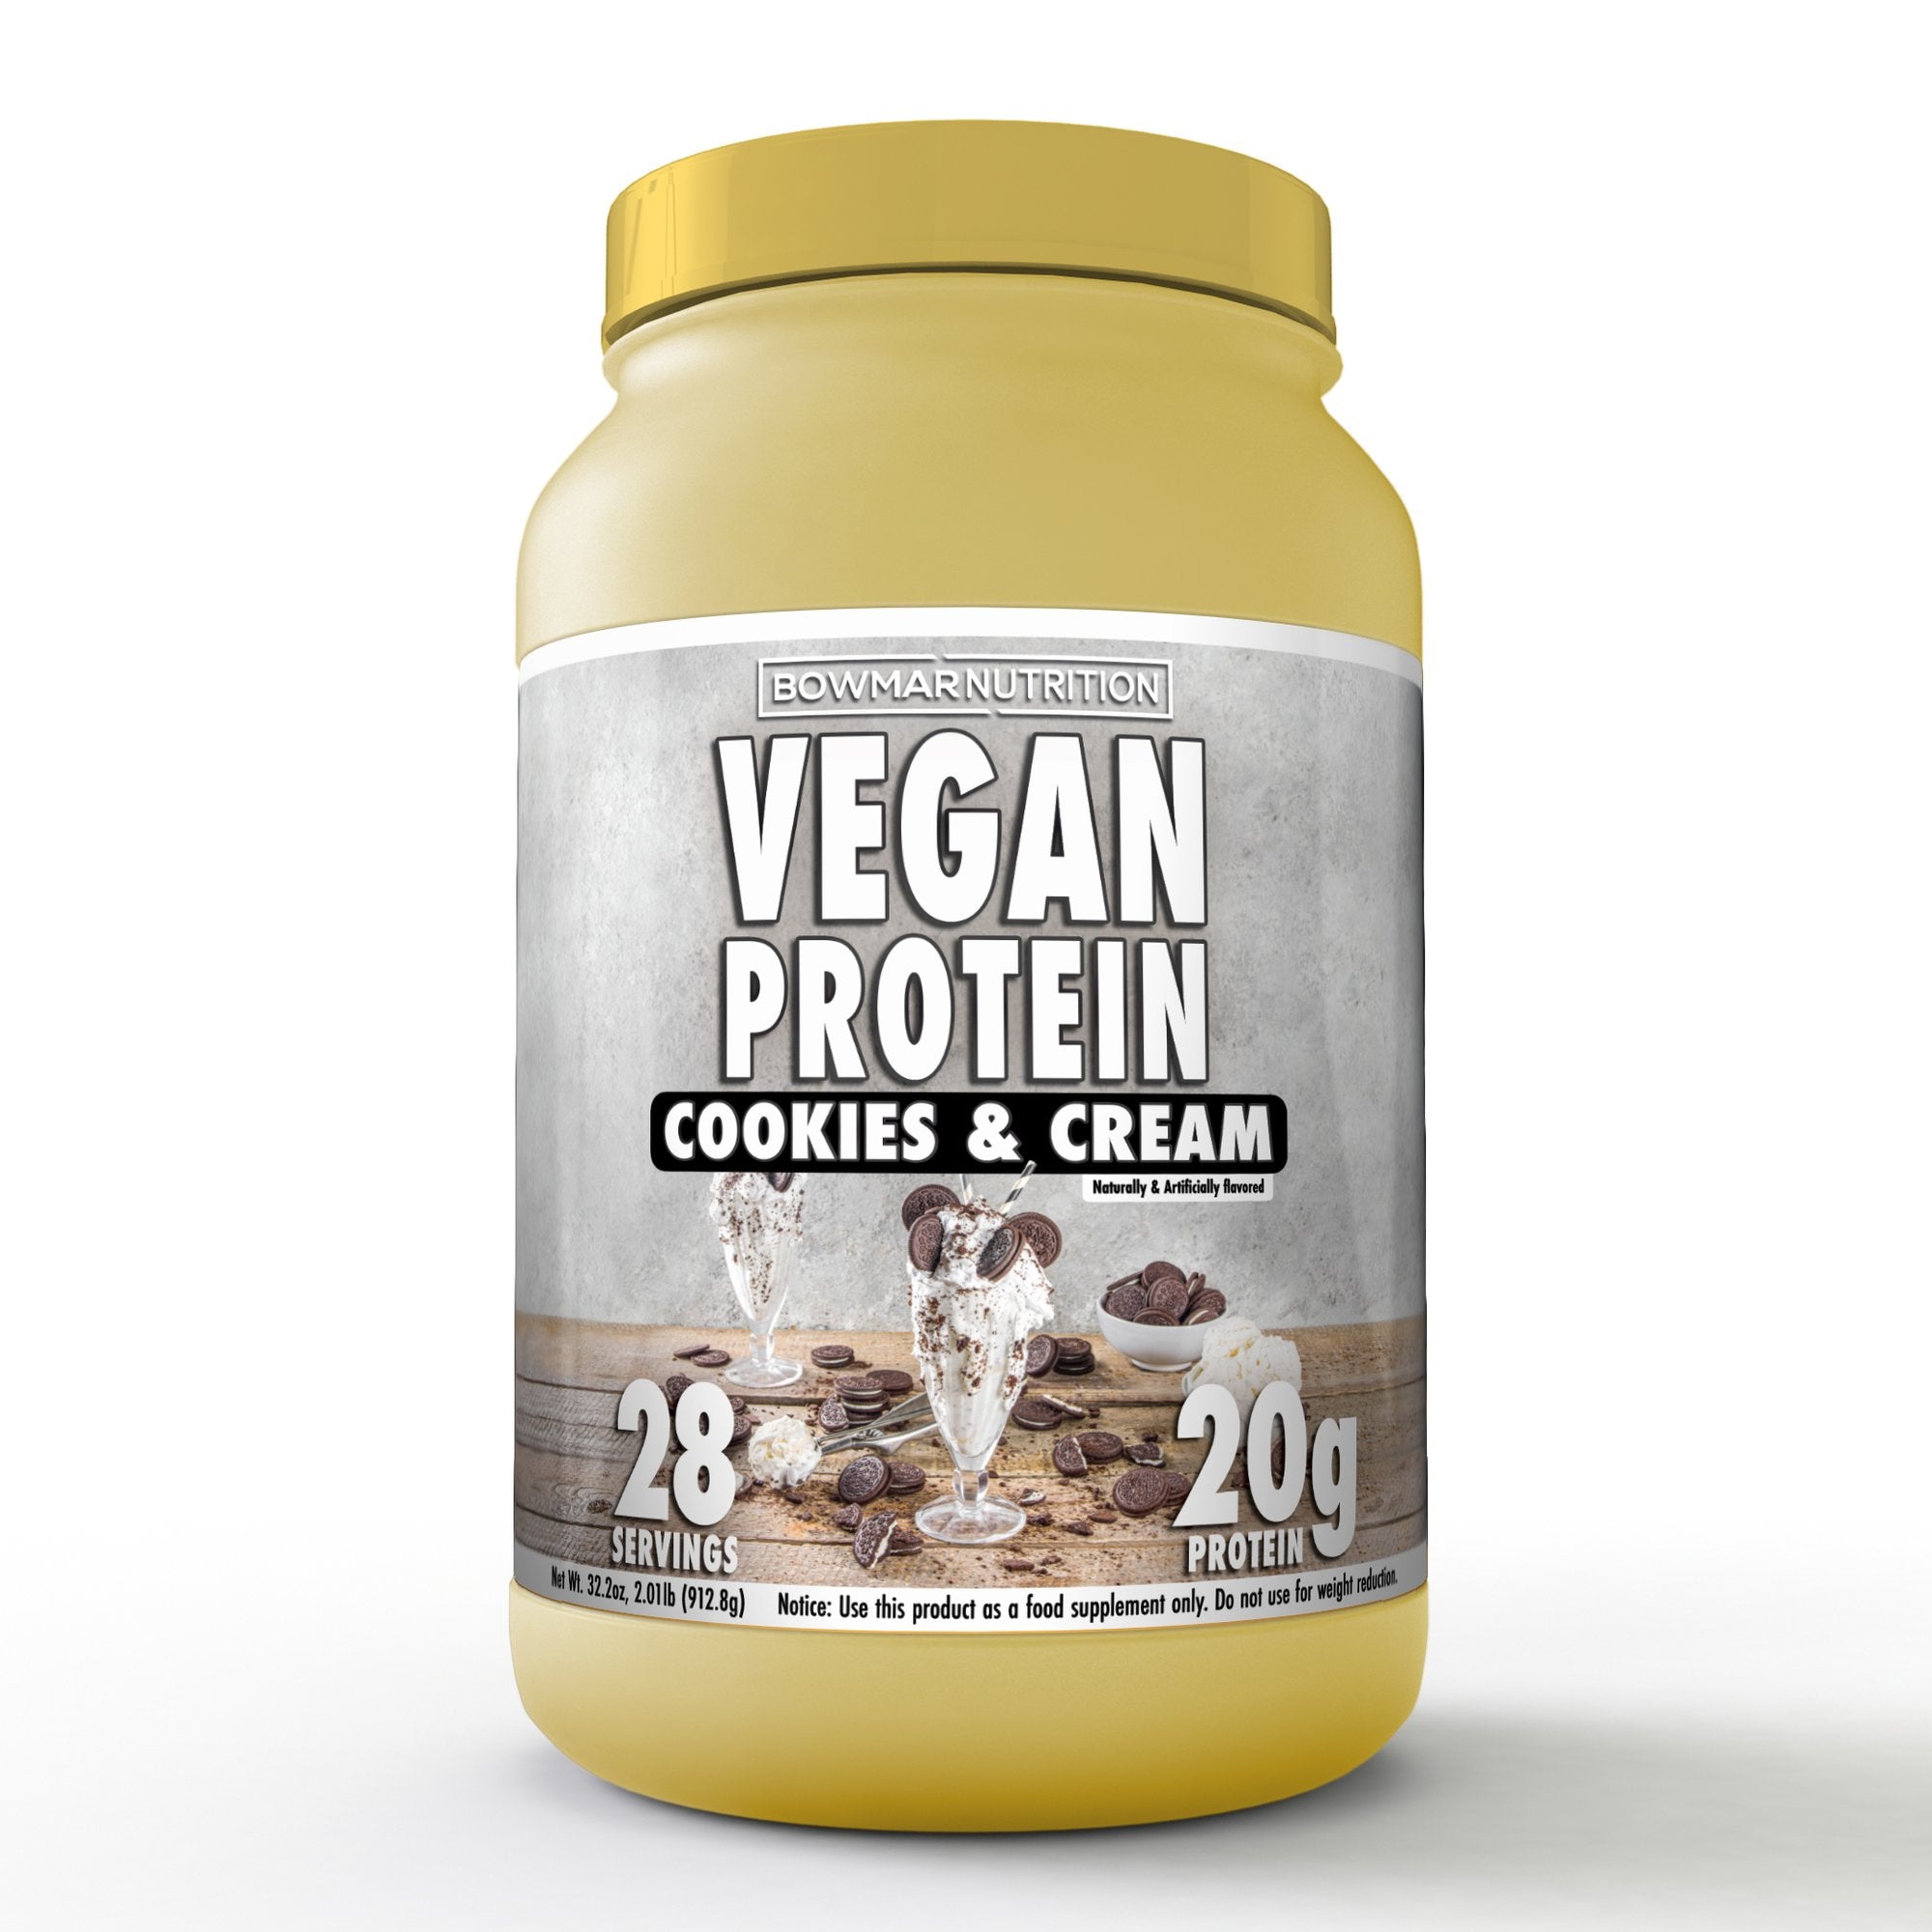 Bowmar Nutrition Vegan Protein (2lb) bowmar-nutrition-vegan-protein-2lb Vegan Protein Cookies And Cream bowmar